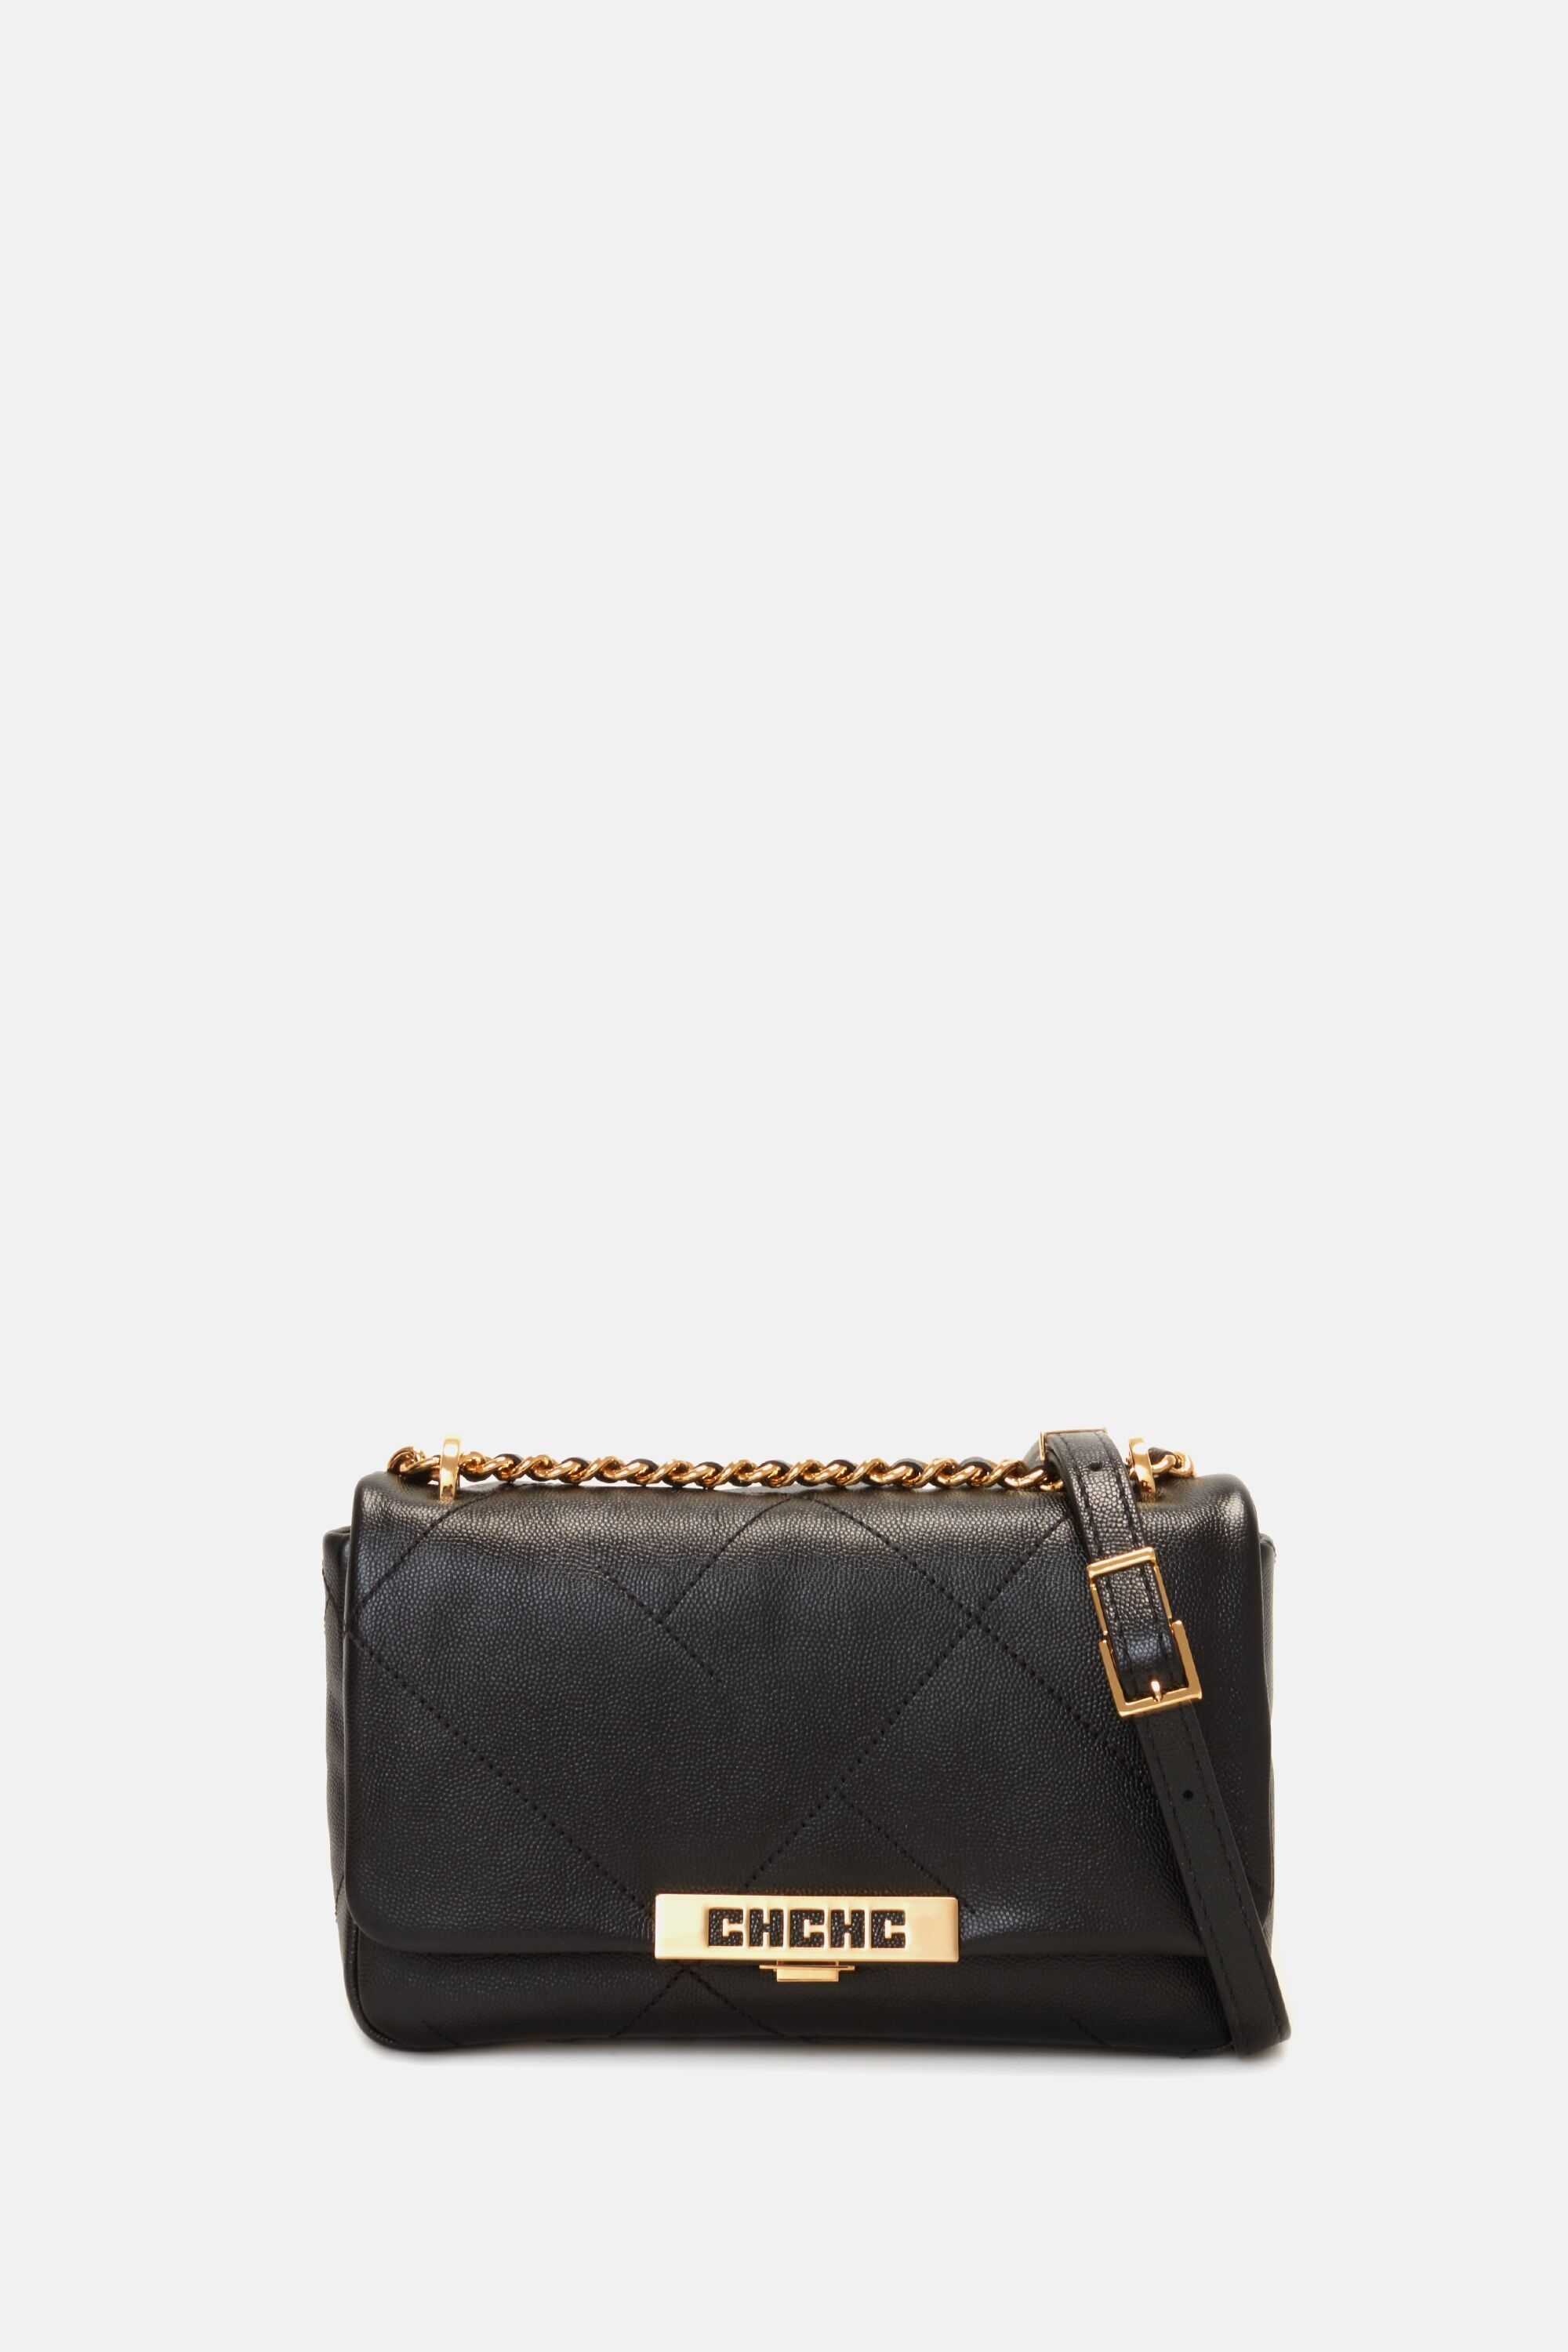 Bimba 9 | Small shoulder bag black - CH Carolina Herrera United States